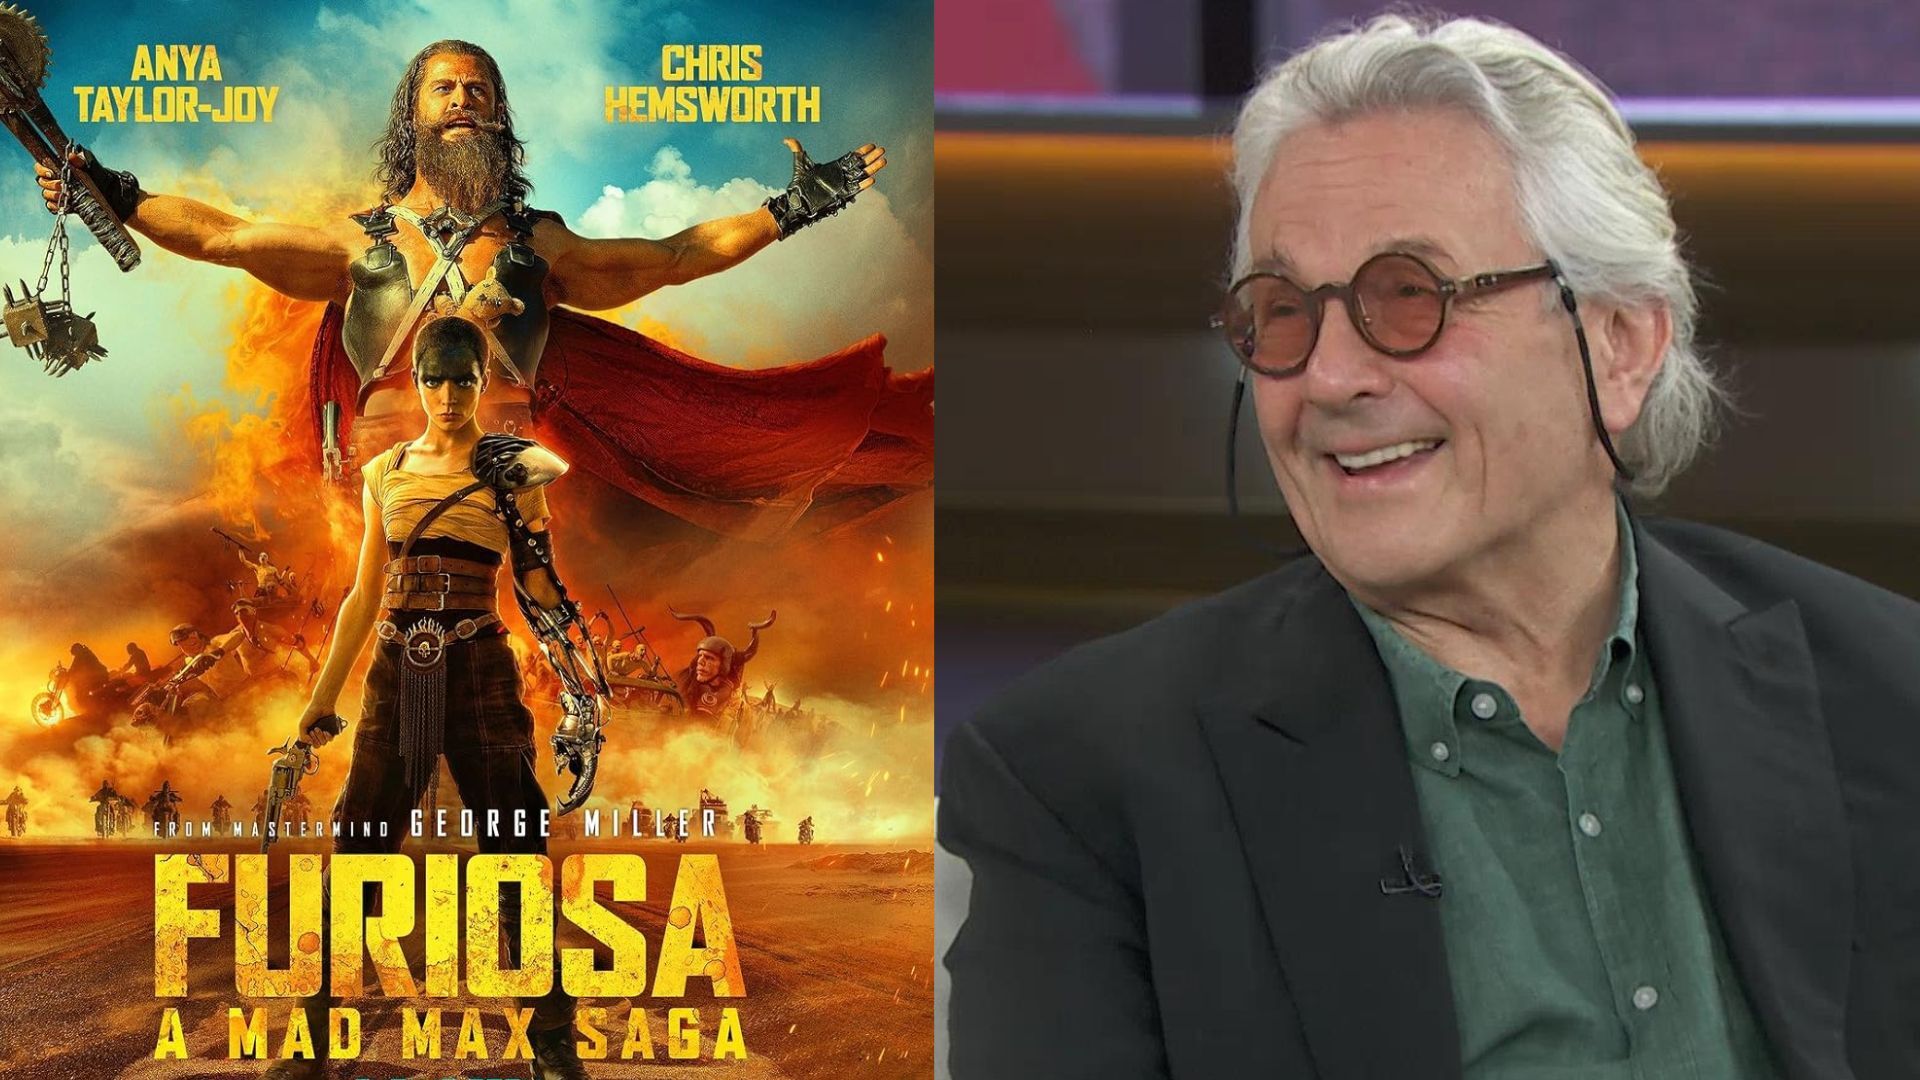 Legendary Director George Miller on creating 'Furiosa: A Mad Max Saga'